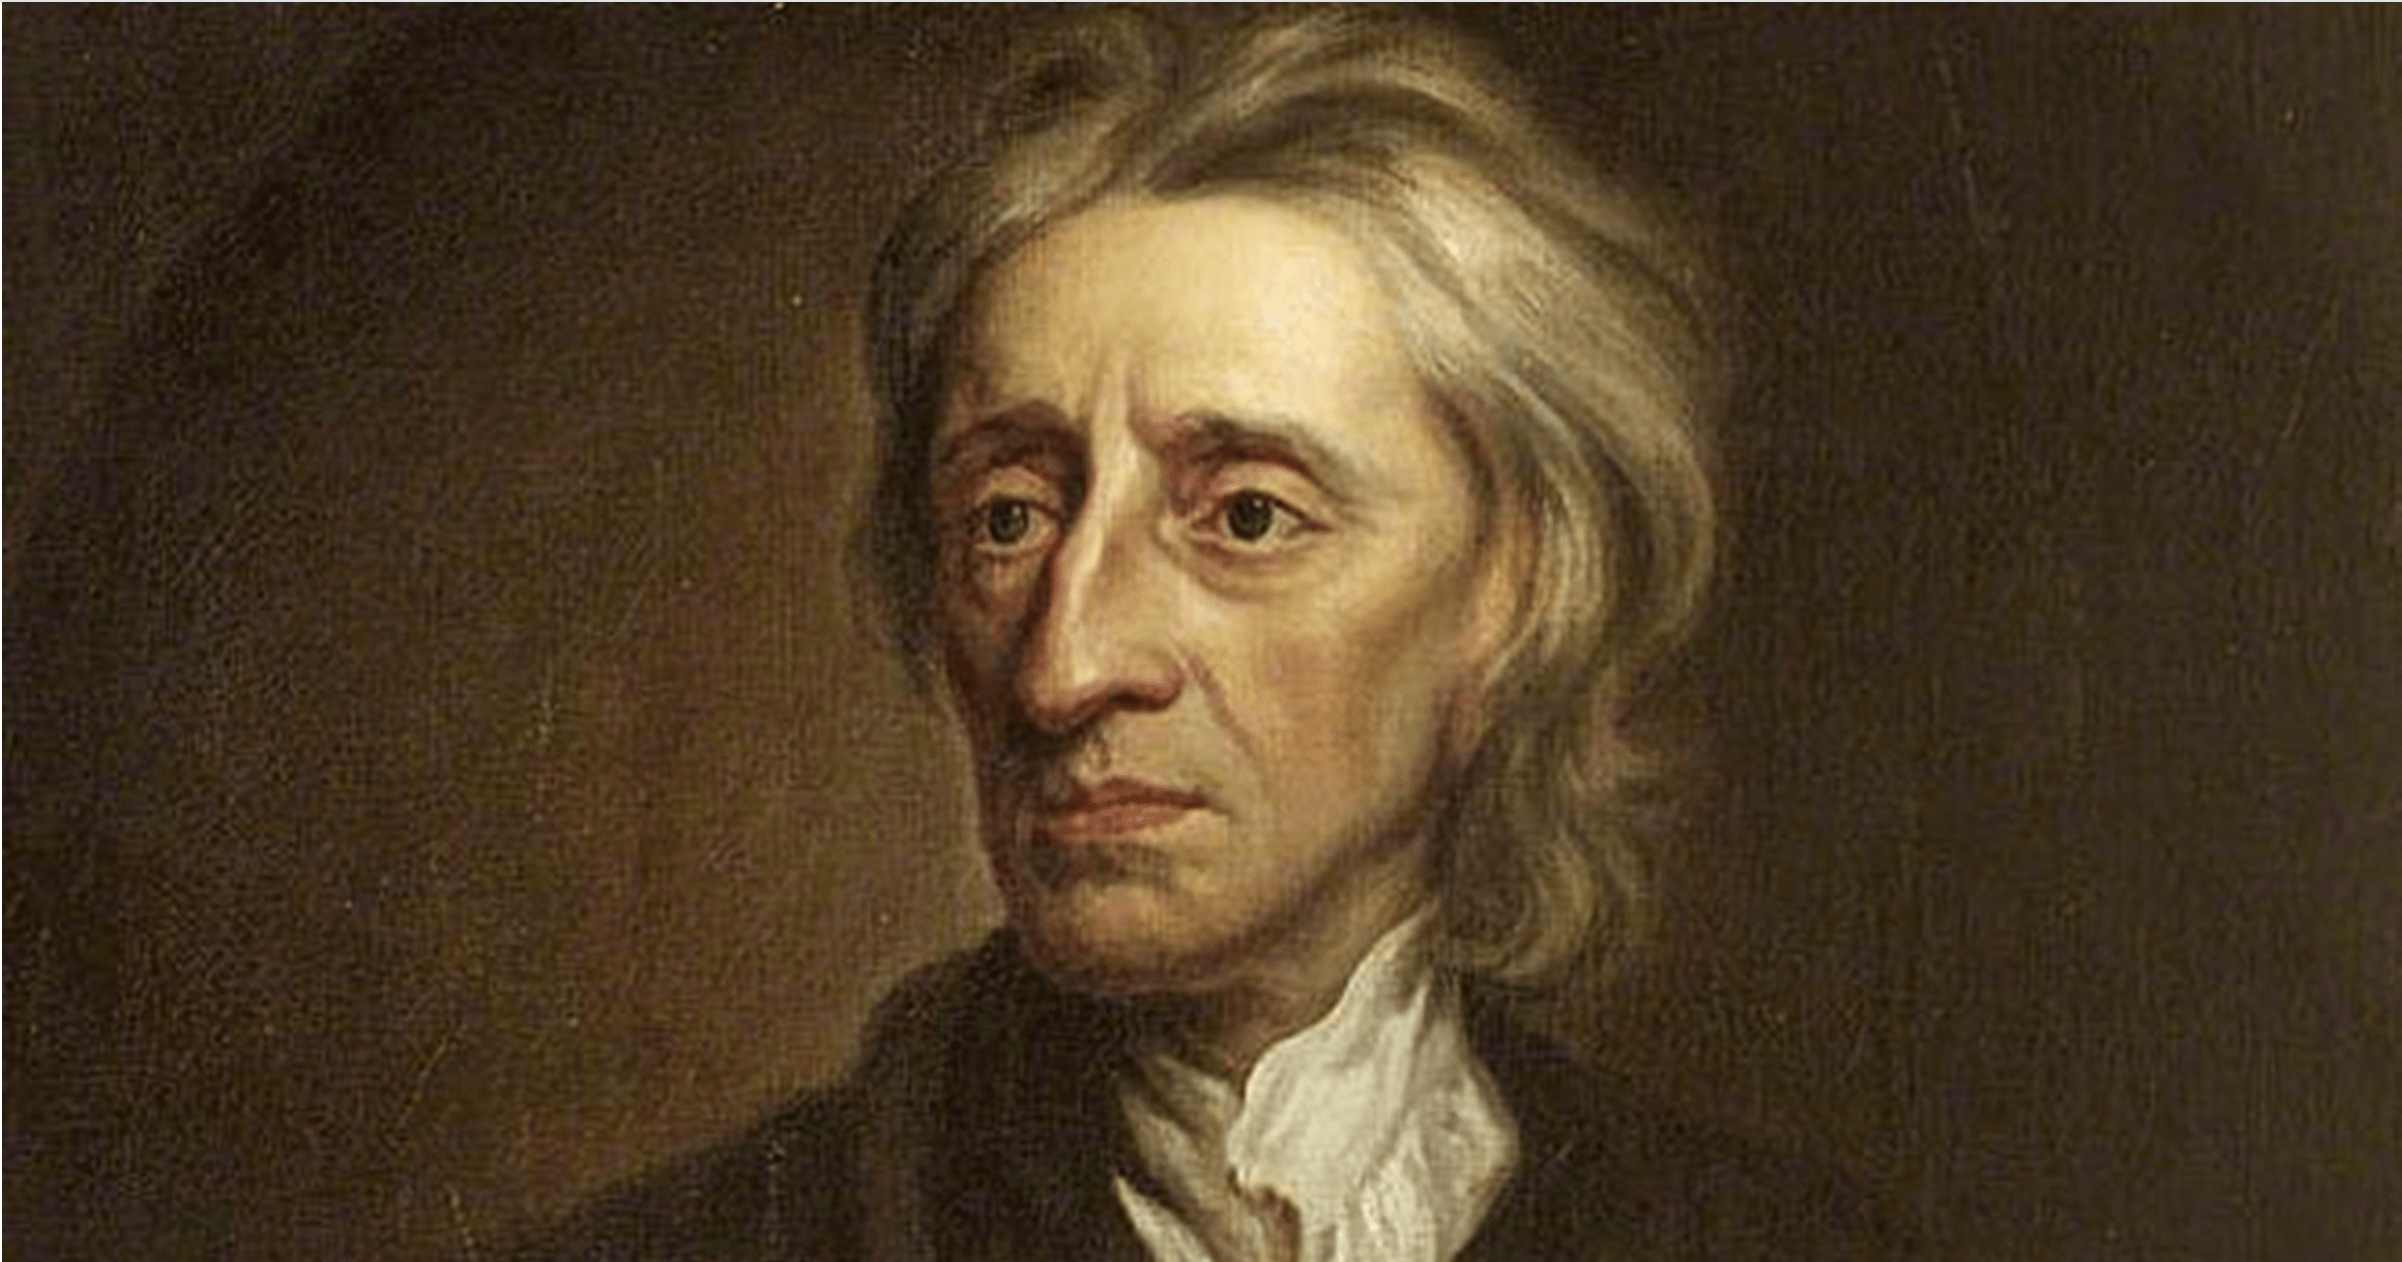 Locke And John Nozicks A Critique Of Libertarianism